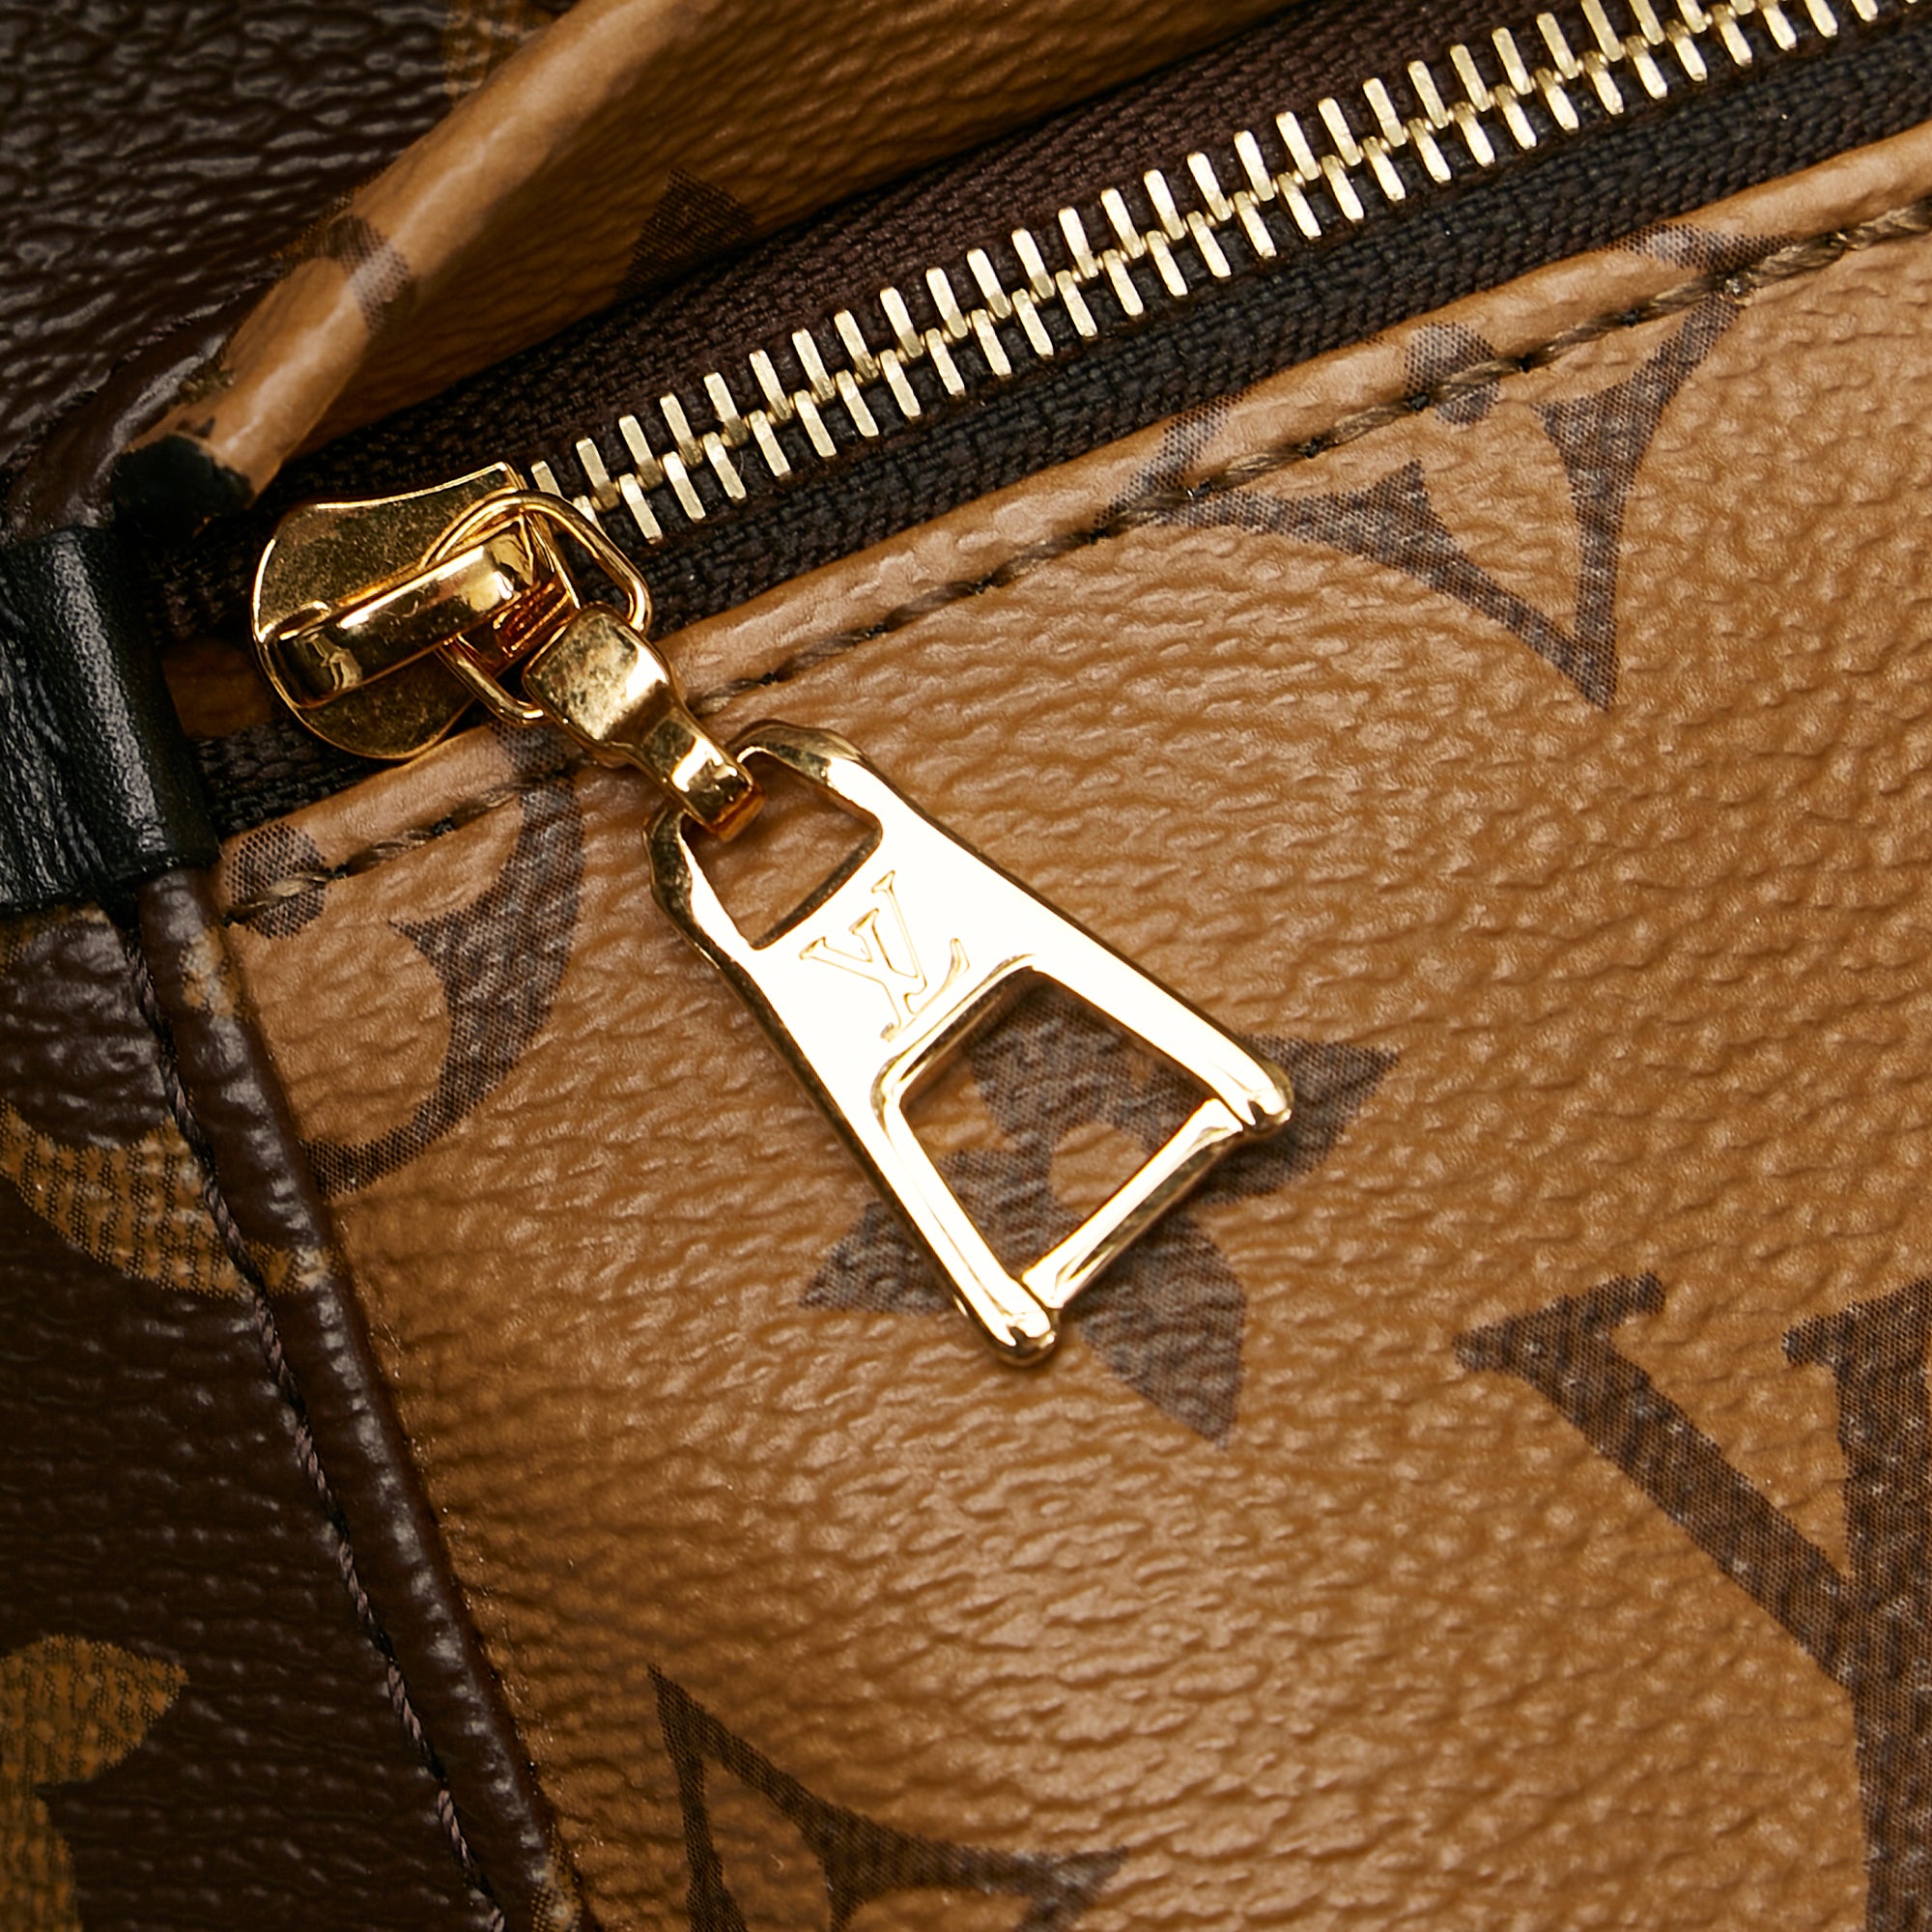 Brown Louis Vuitton Monogram Palm Springs MM Backpack – Designer Revival